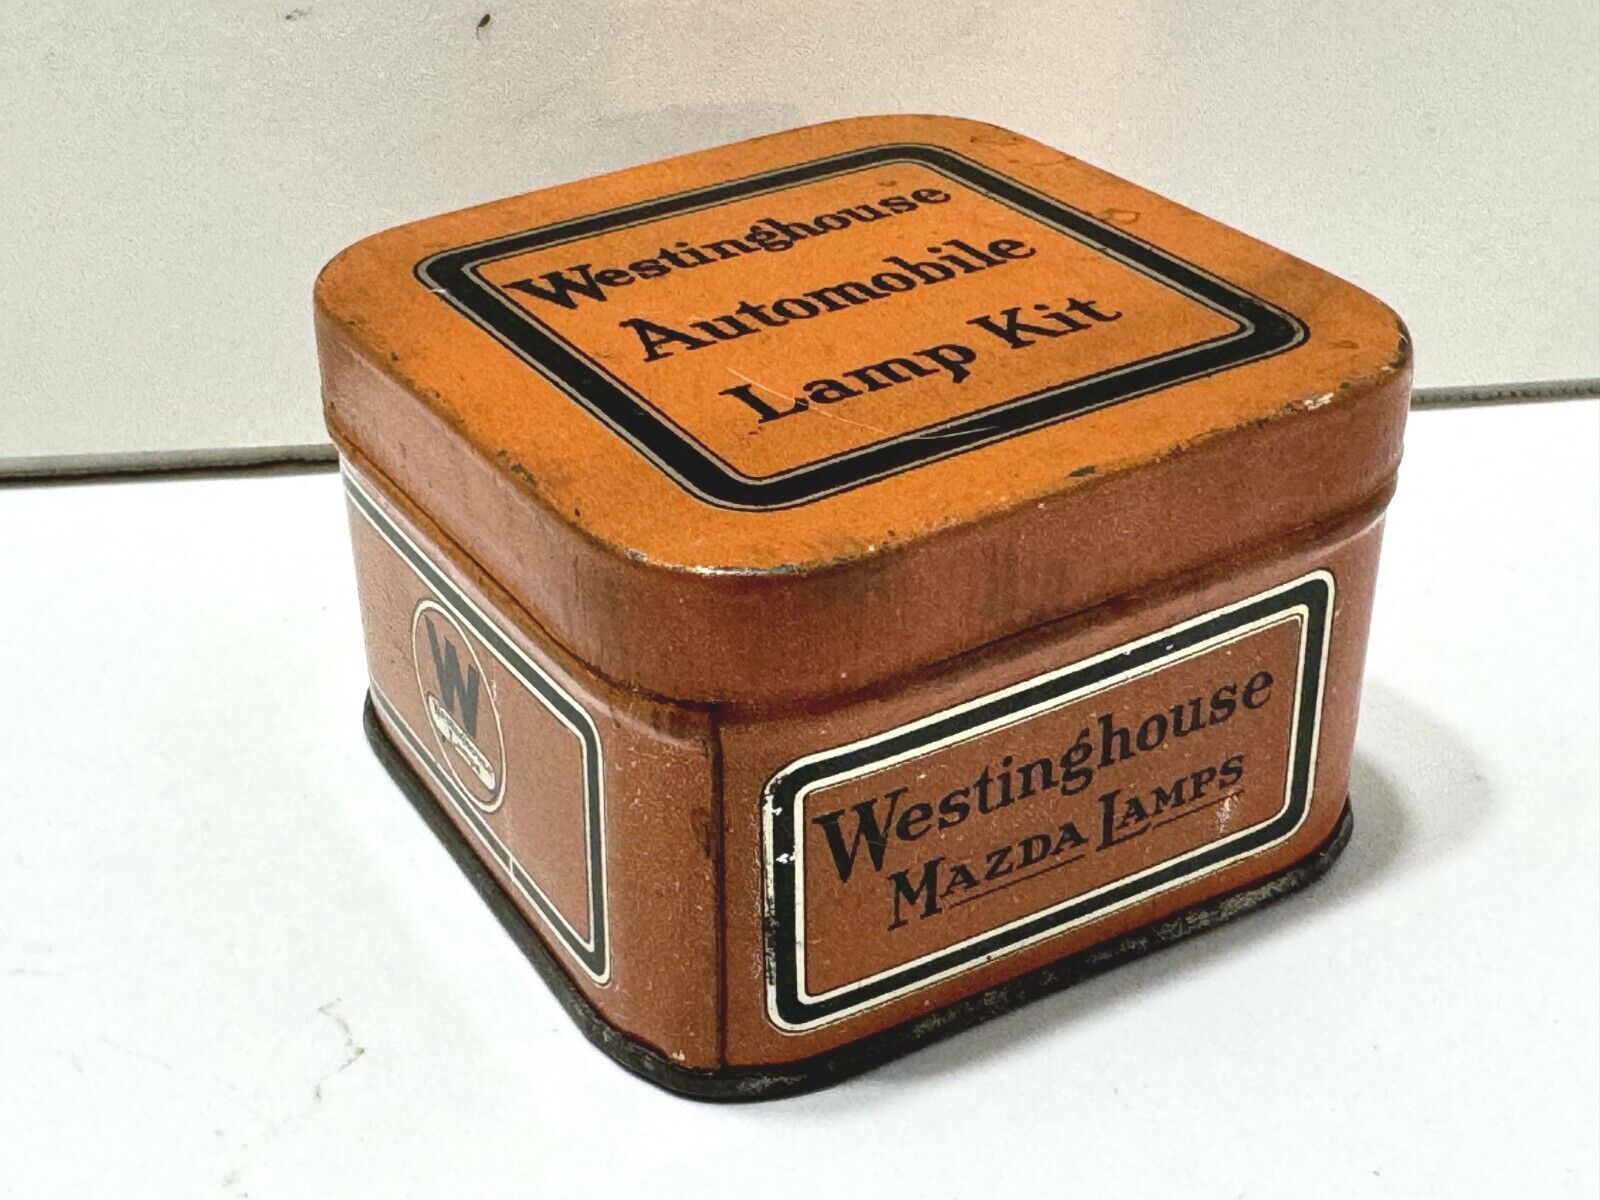 Westinghouse Automobile Lamp Kit Tin Box With Mazda Bulbs